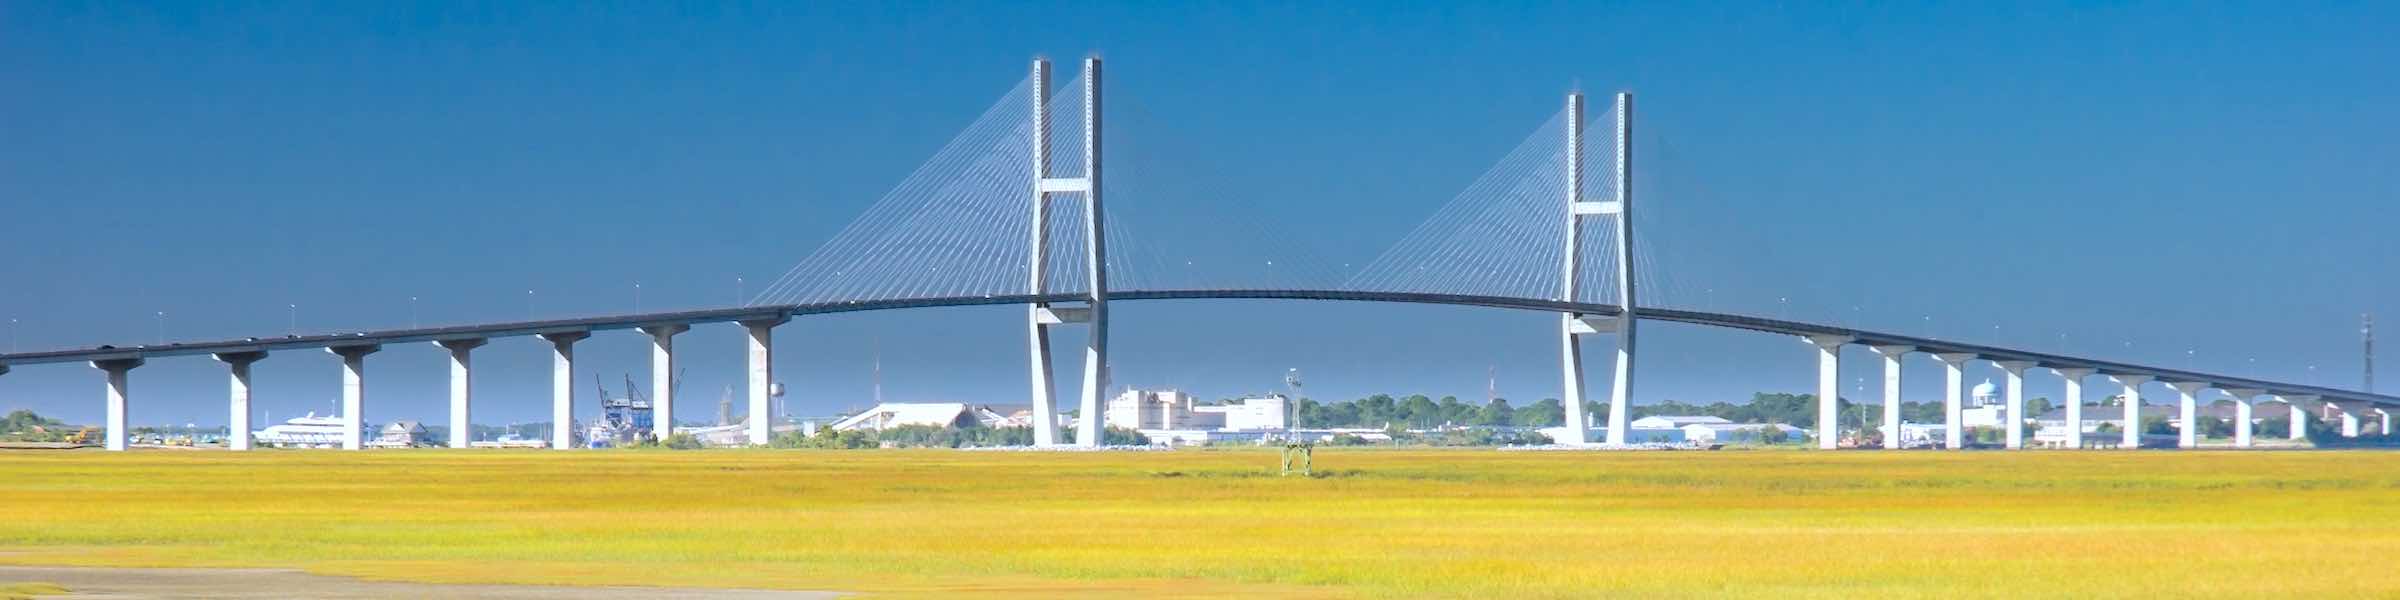 The Sidney Lanier Bridge seen across the marsh.